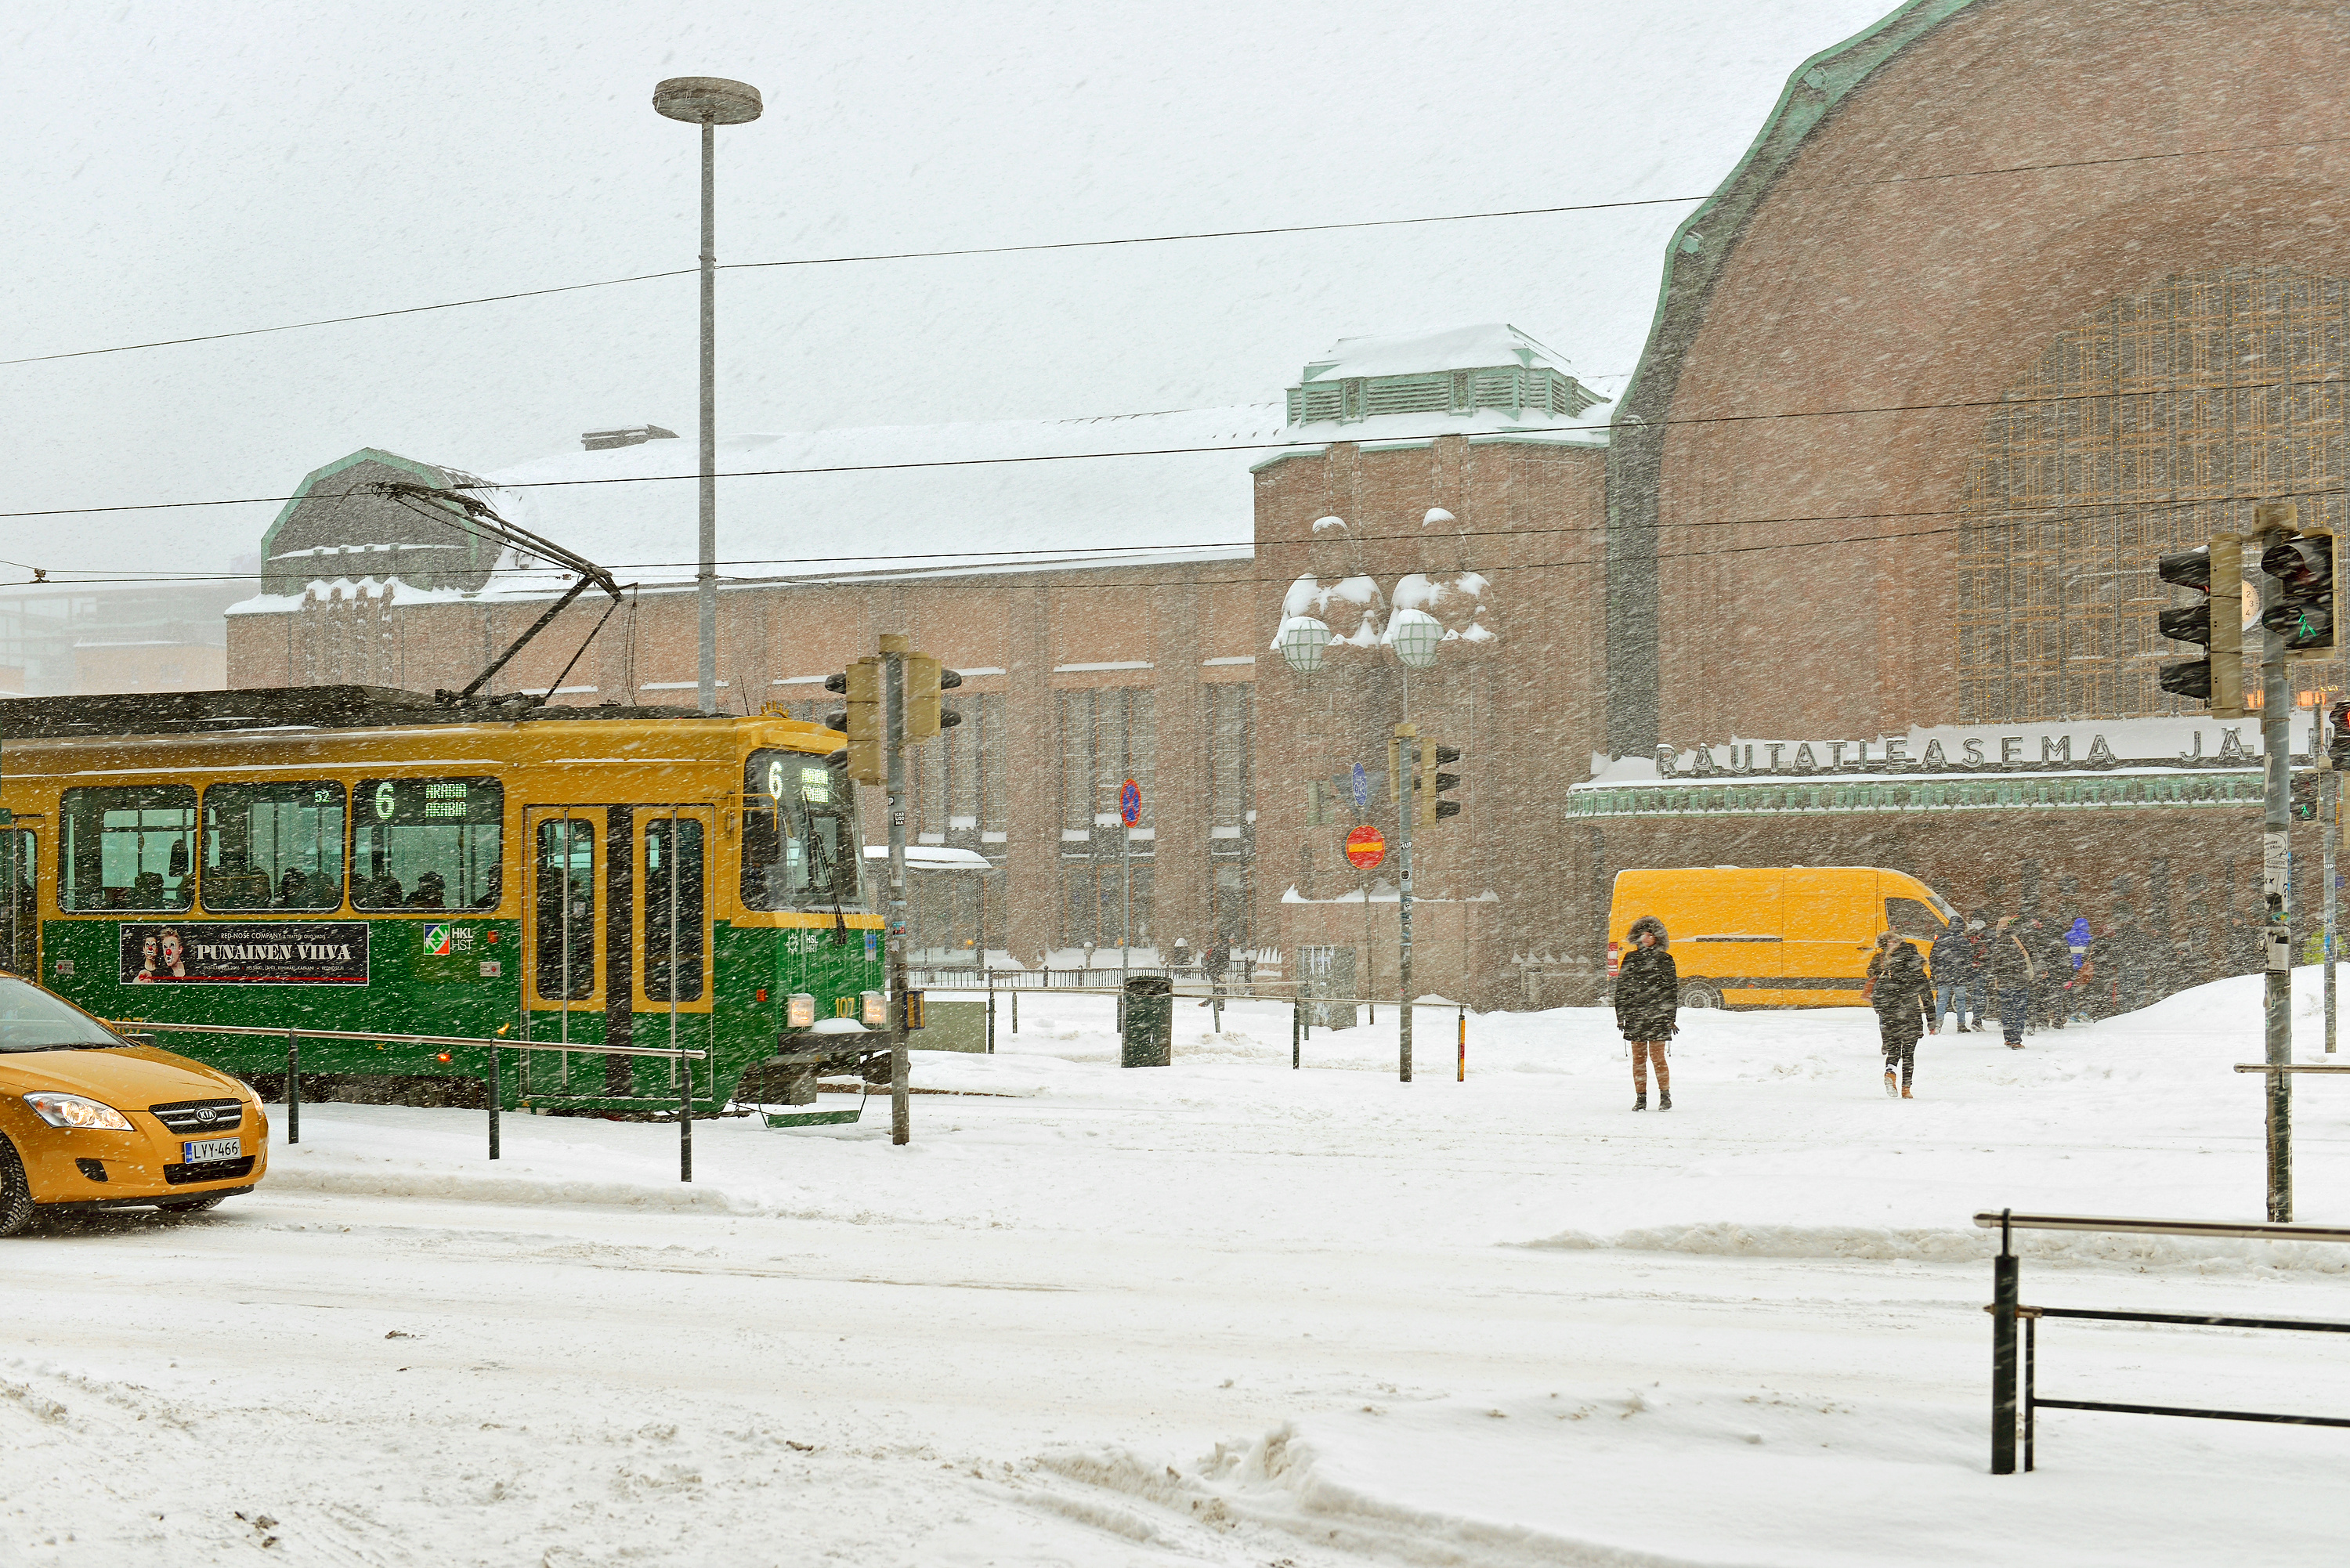 Paysage urbain hivernal. Chute de neige et blizzard à la gare centrale d'Helsinki © valeriyap - stock.adobe.com